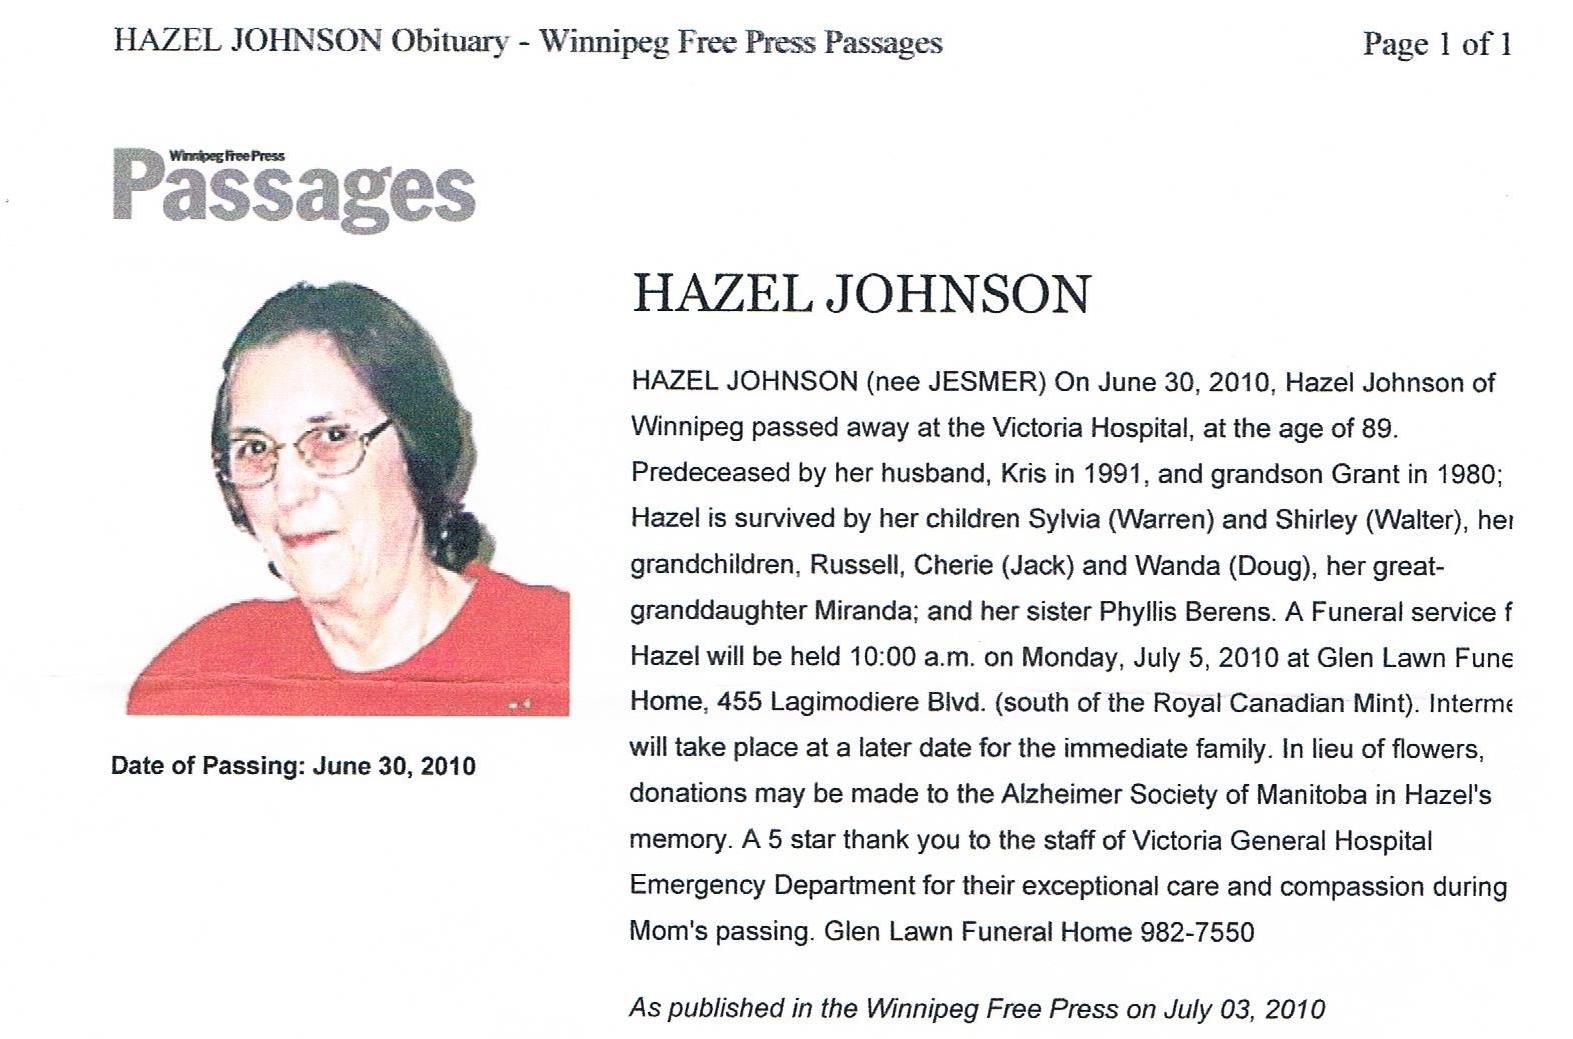 Hazel Johnson obituary-closer view